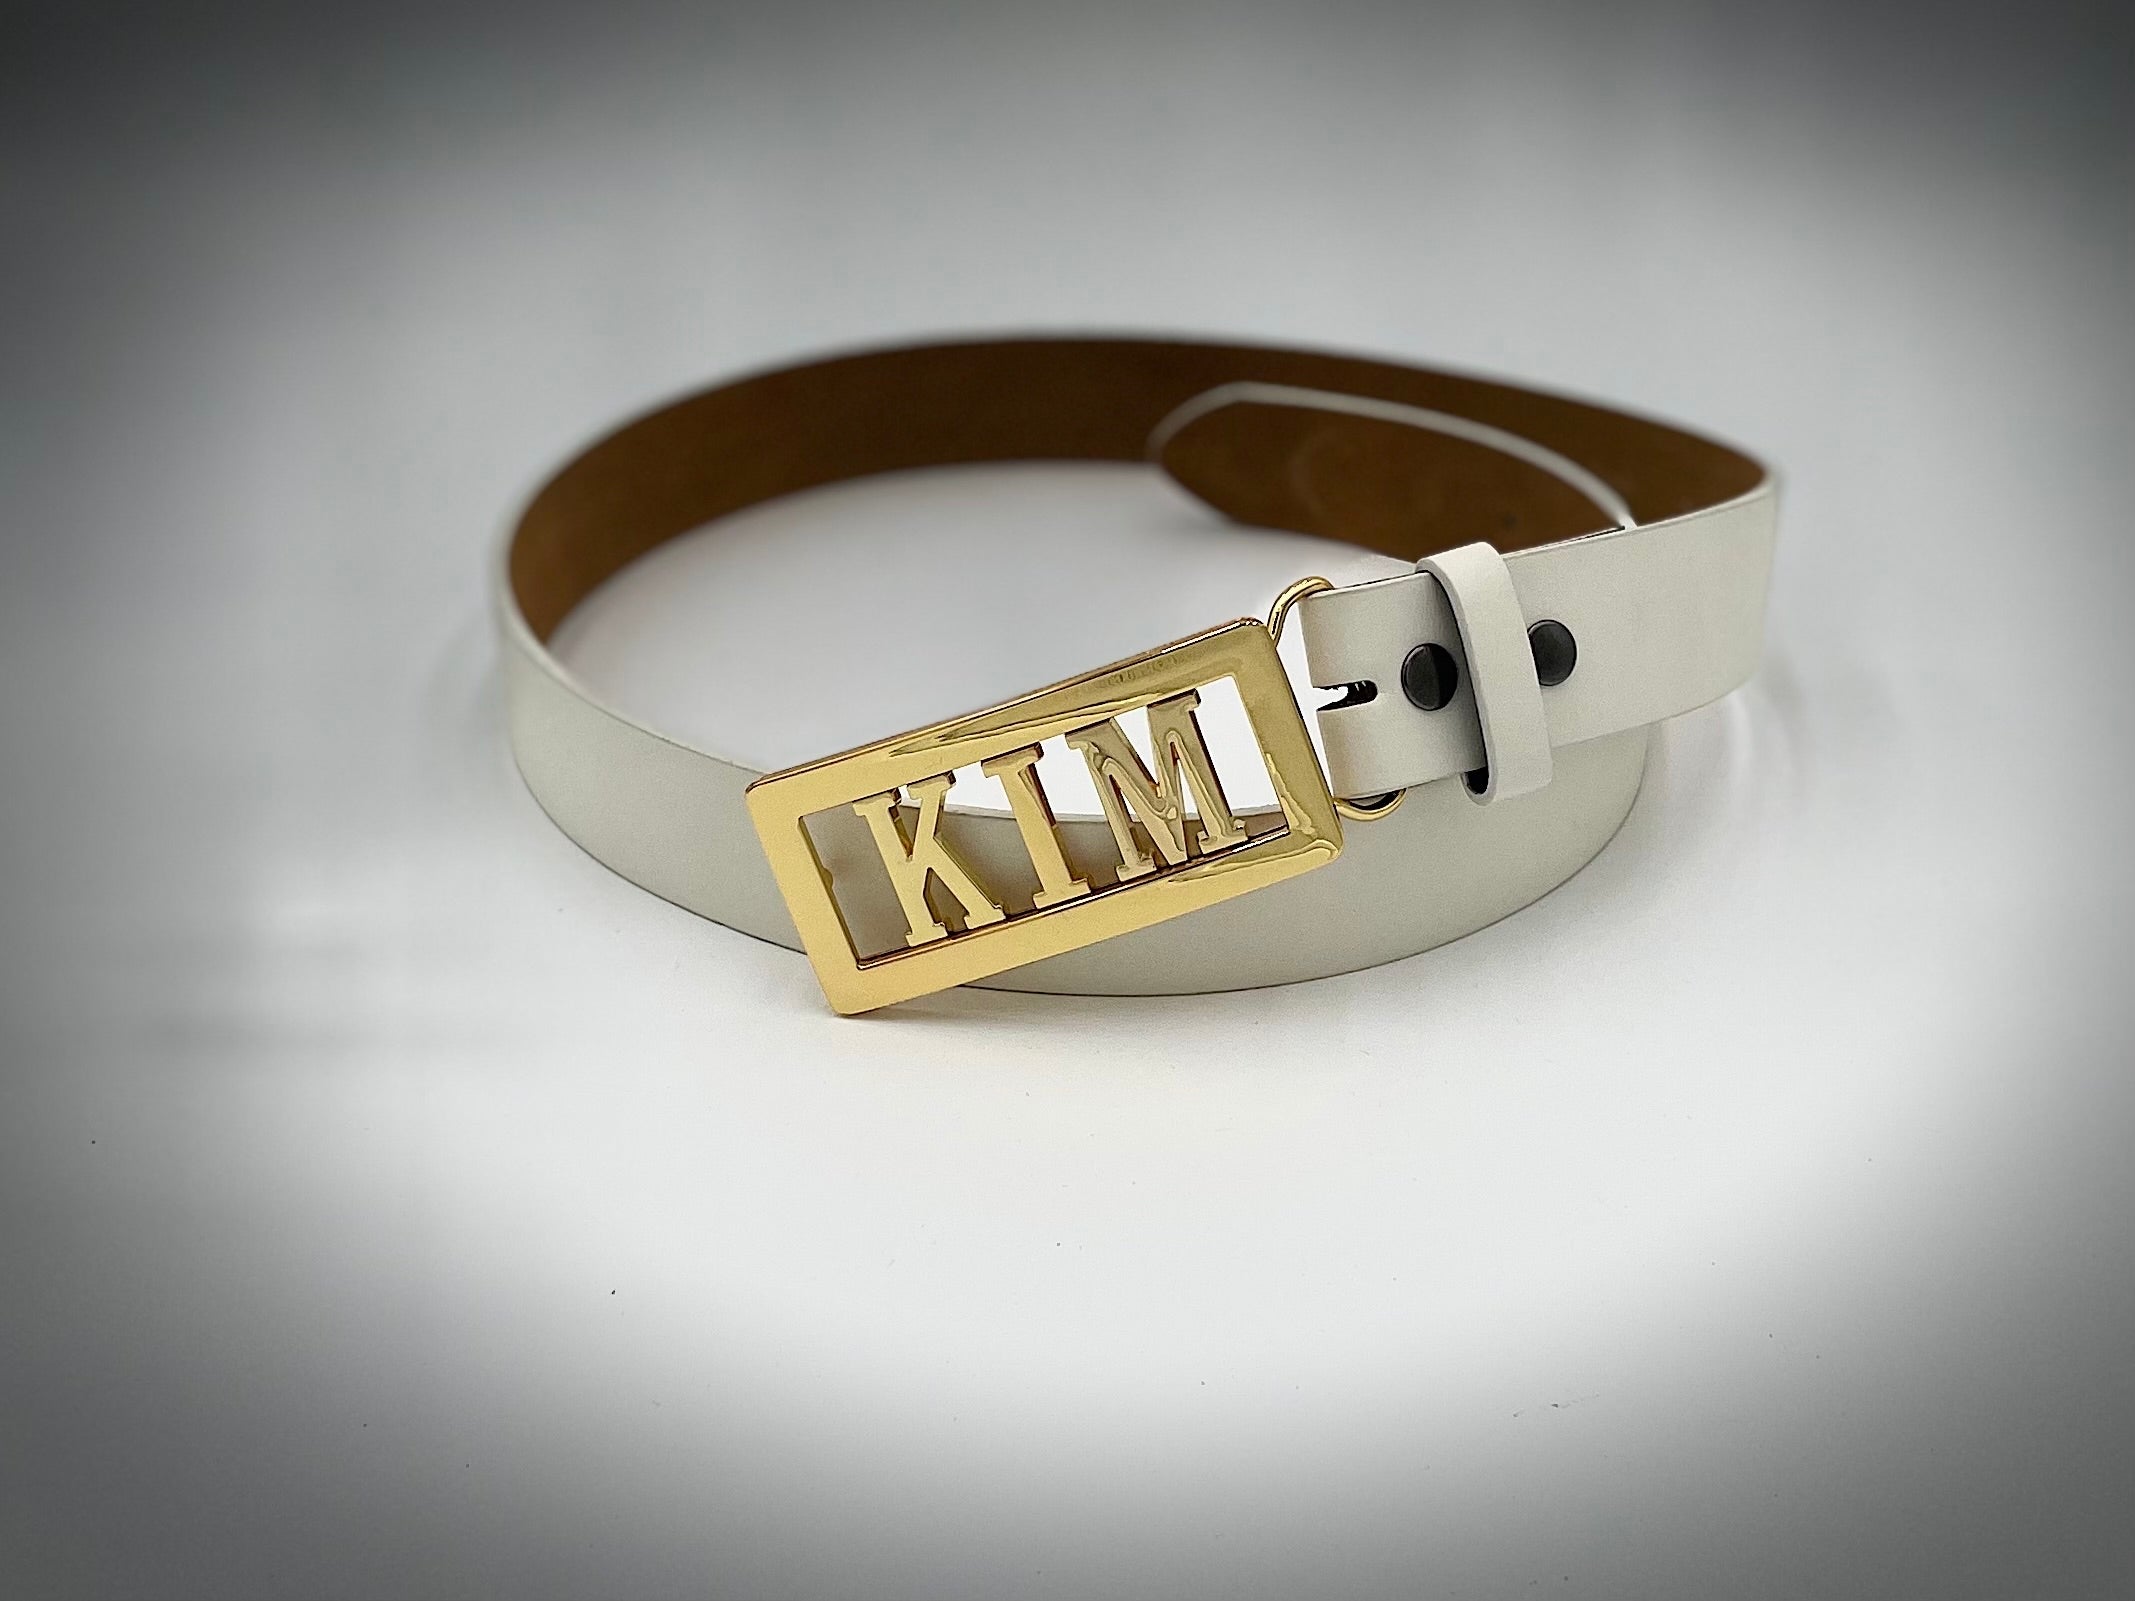 Kim custom belt buckle gold frame gold letters with free belt